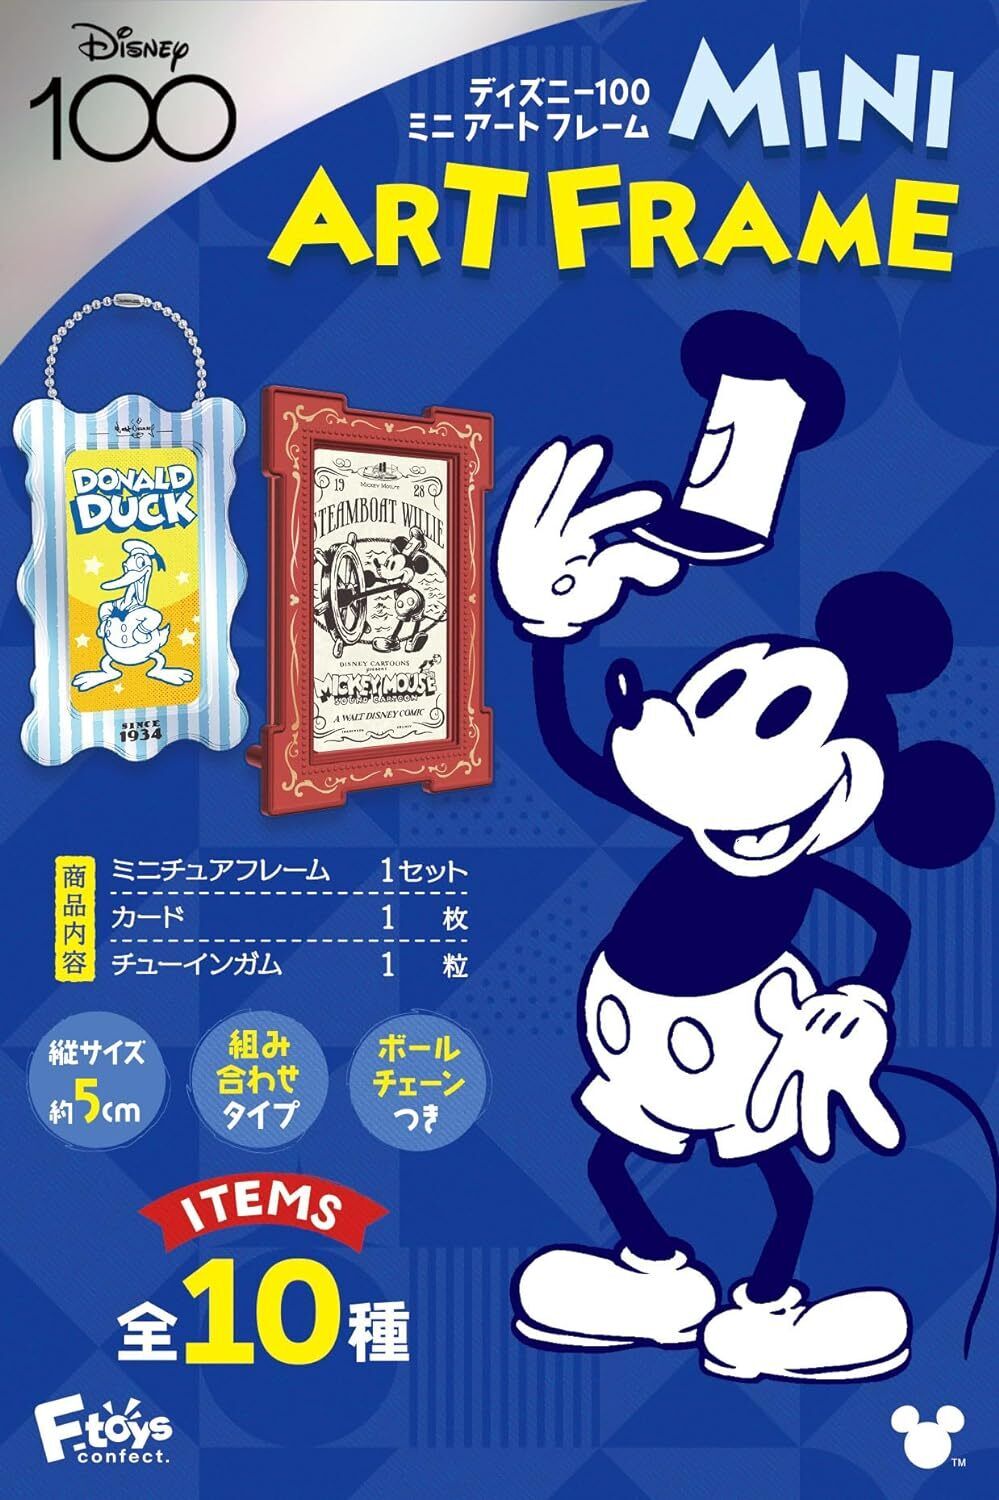 F-Toys Confect Disney 100 Mini Art Frame Full Complete 10 Pieces Japan